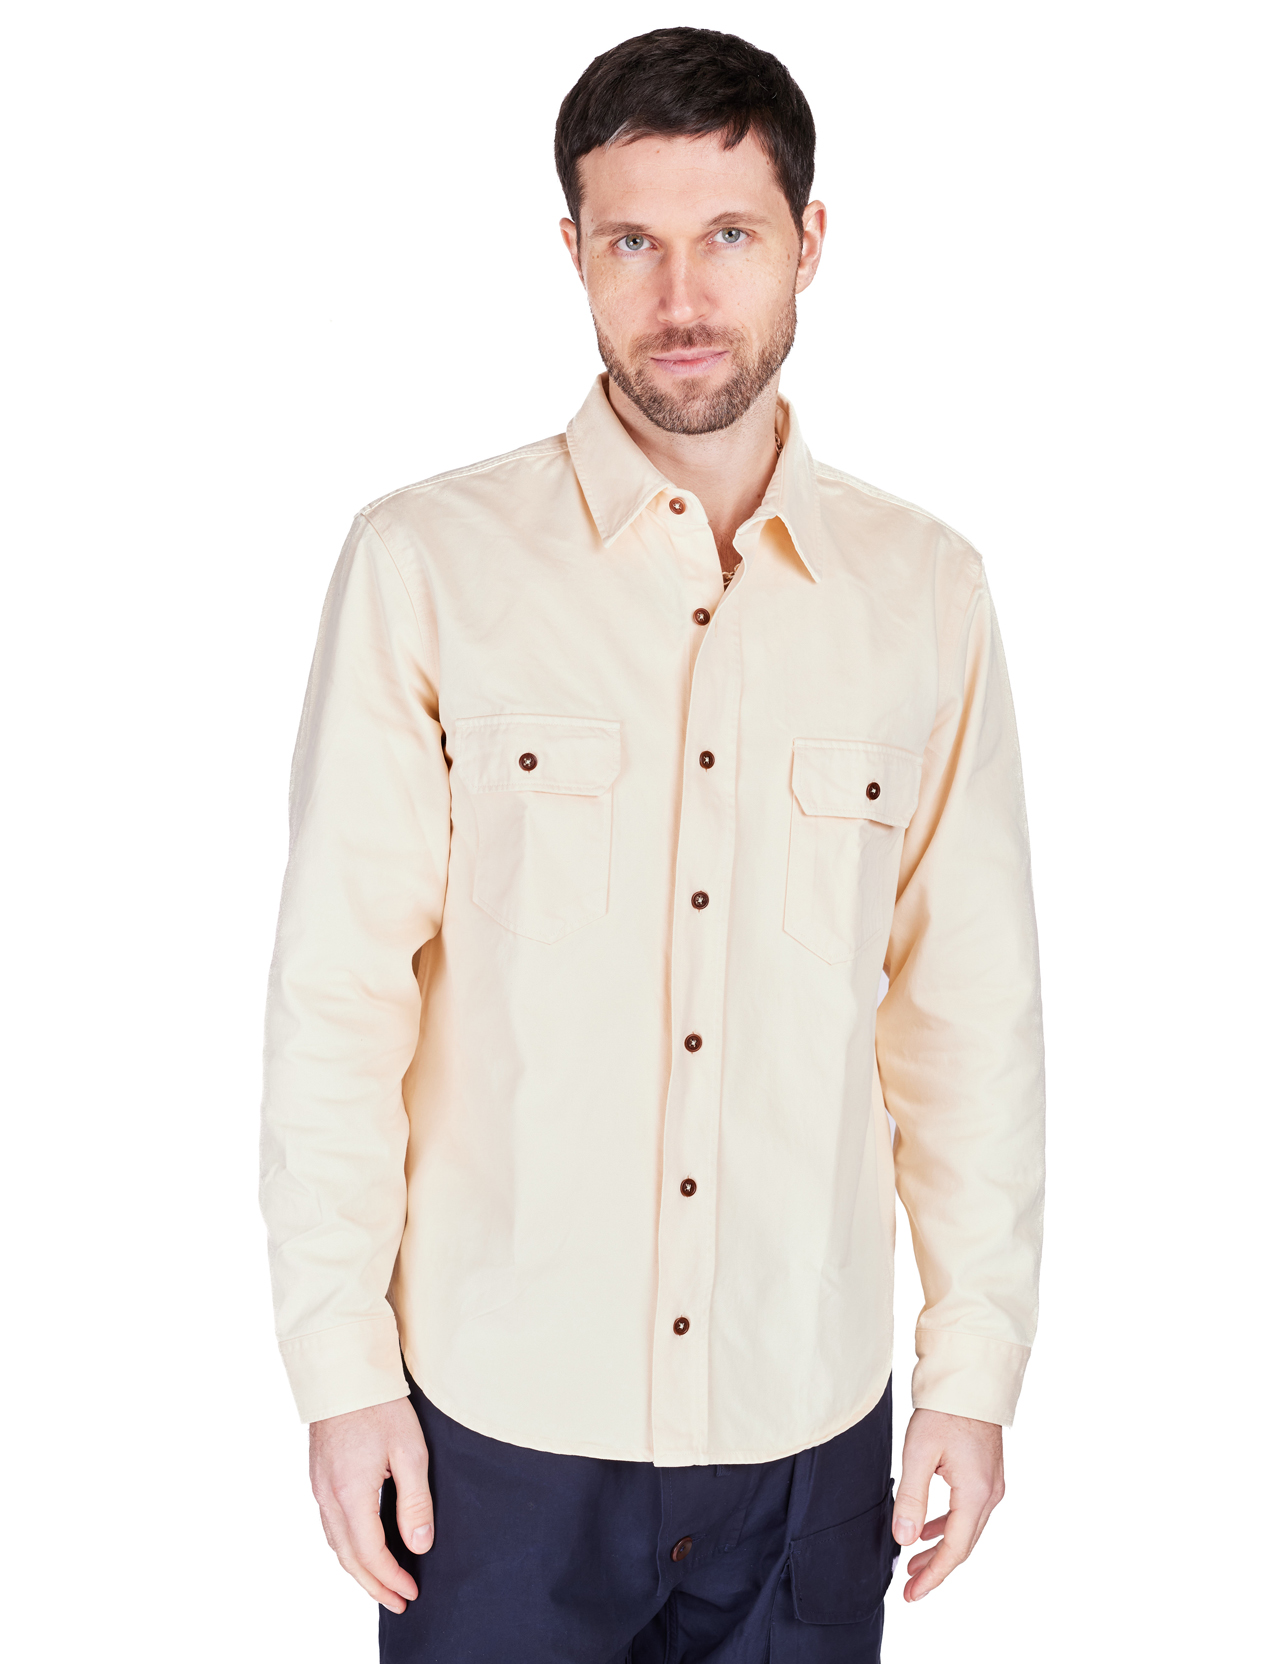 Indigofera - Alamo Shirt Cotton Twill - Sand White